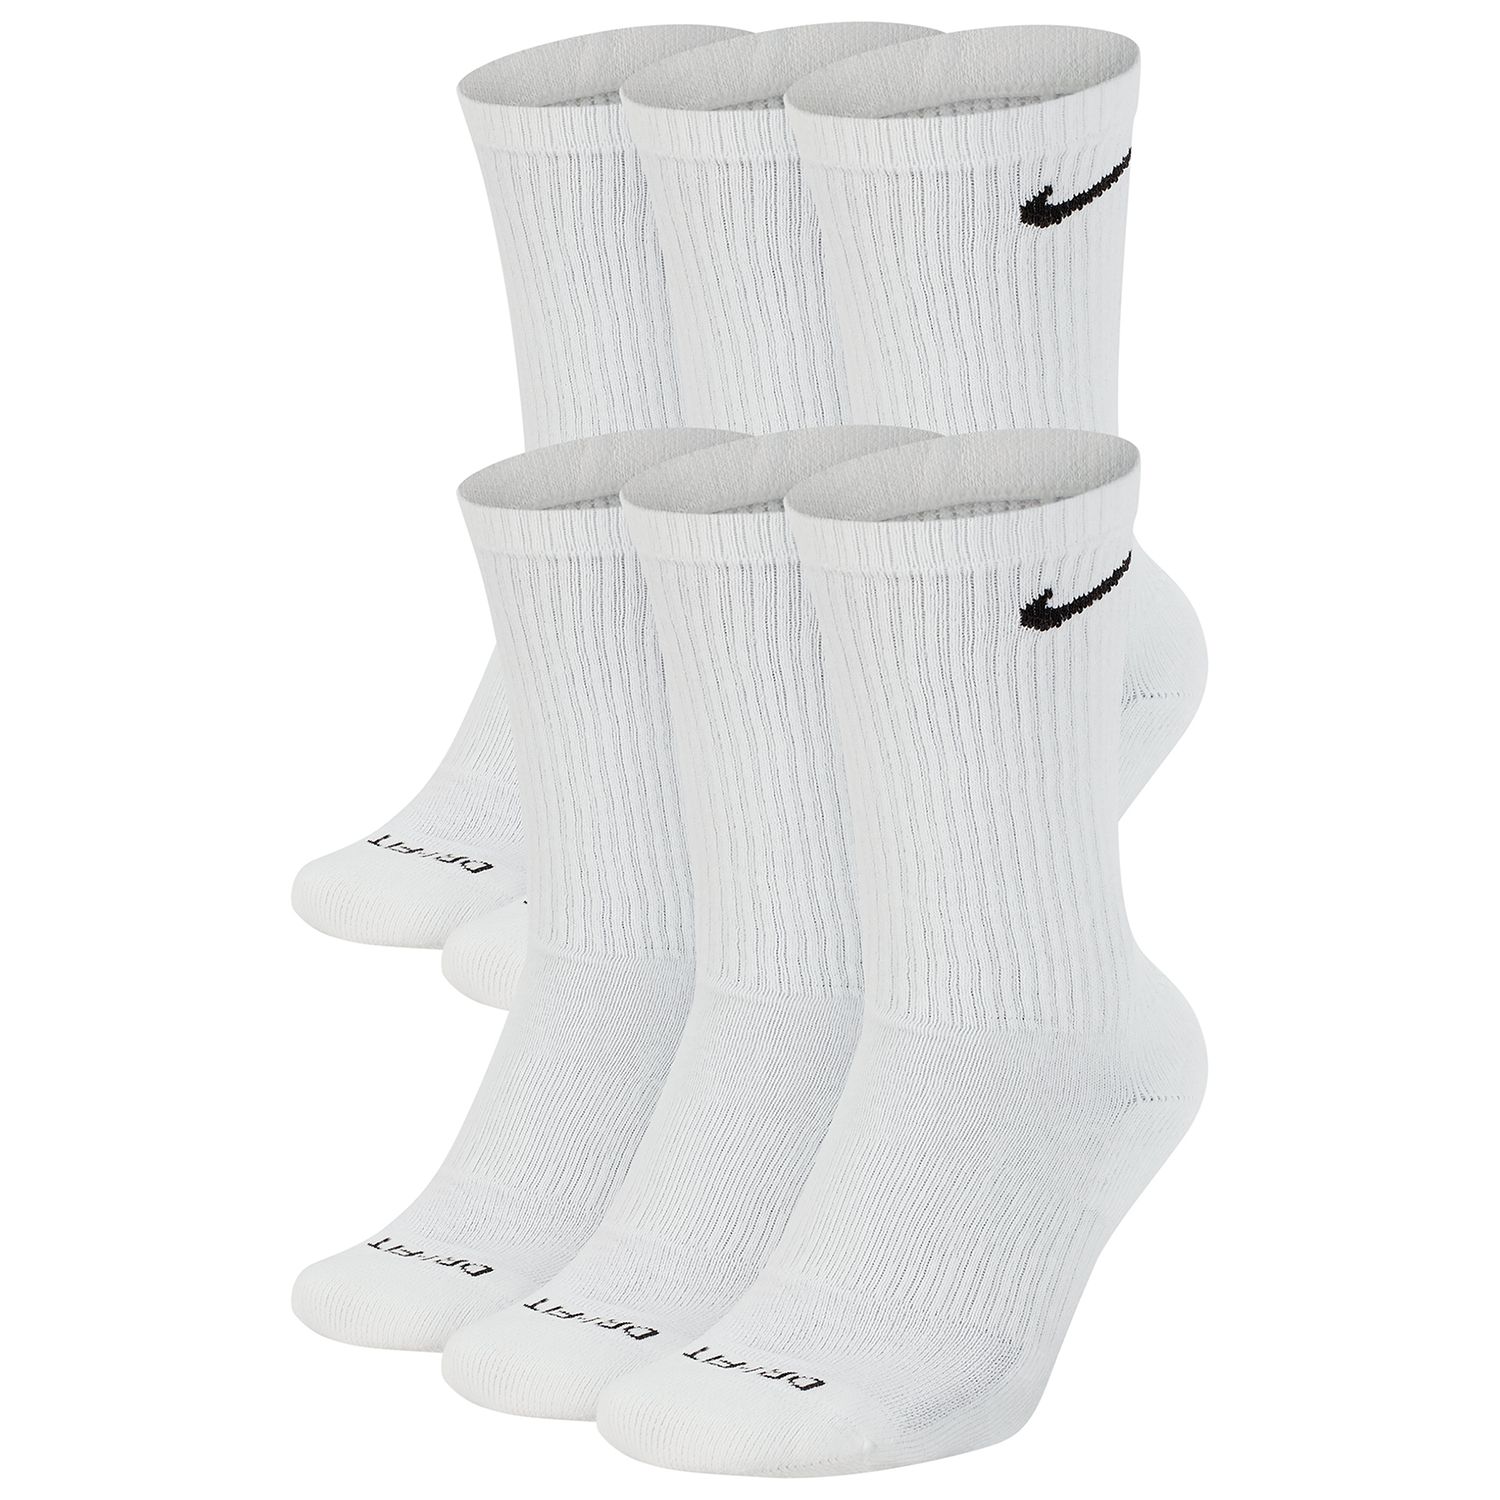 6 pair nike socks